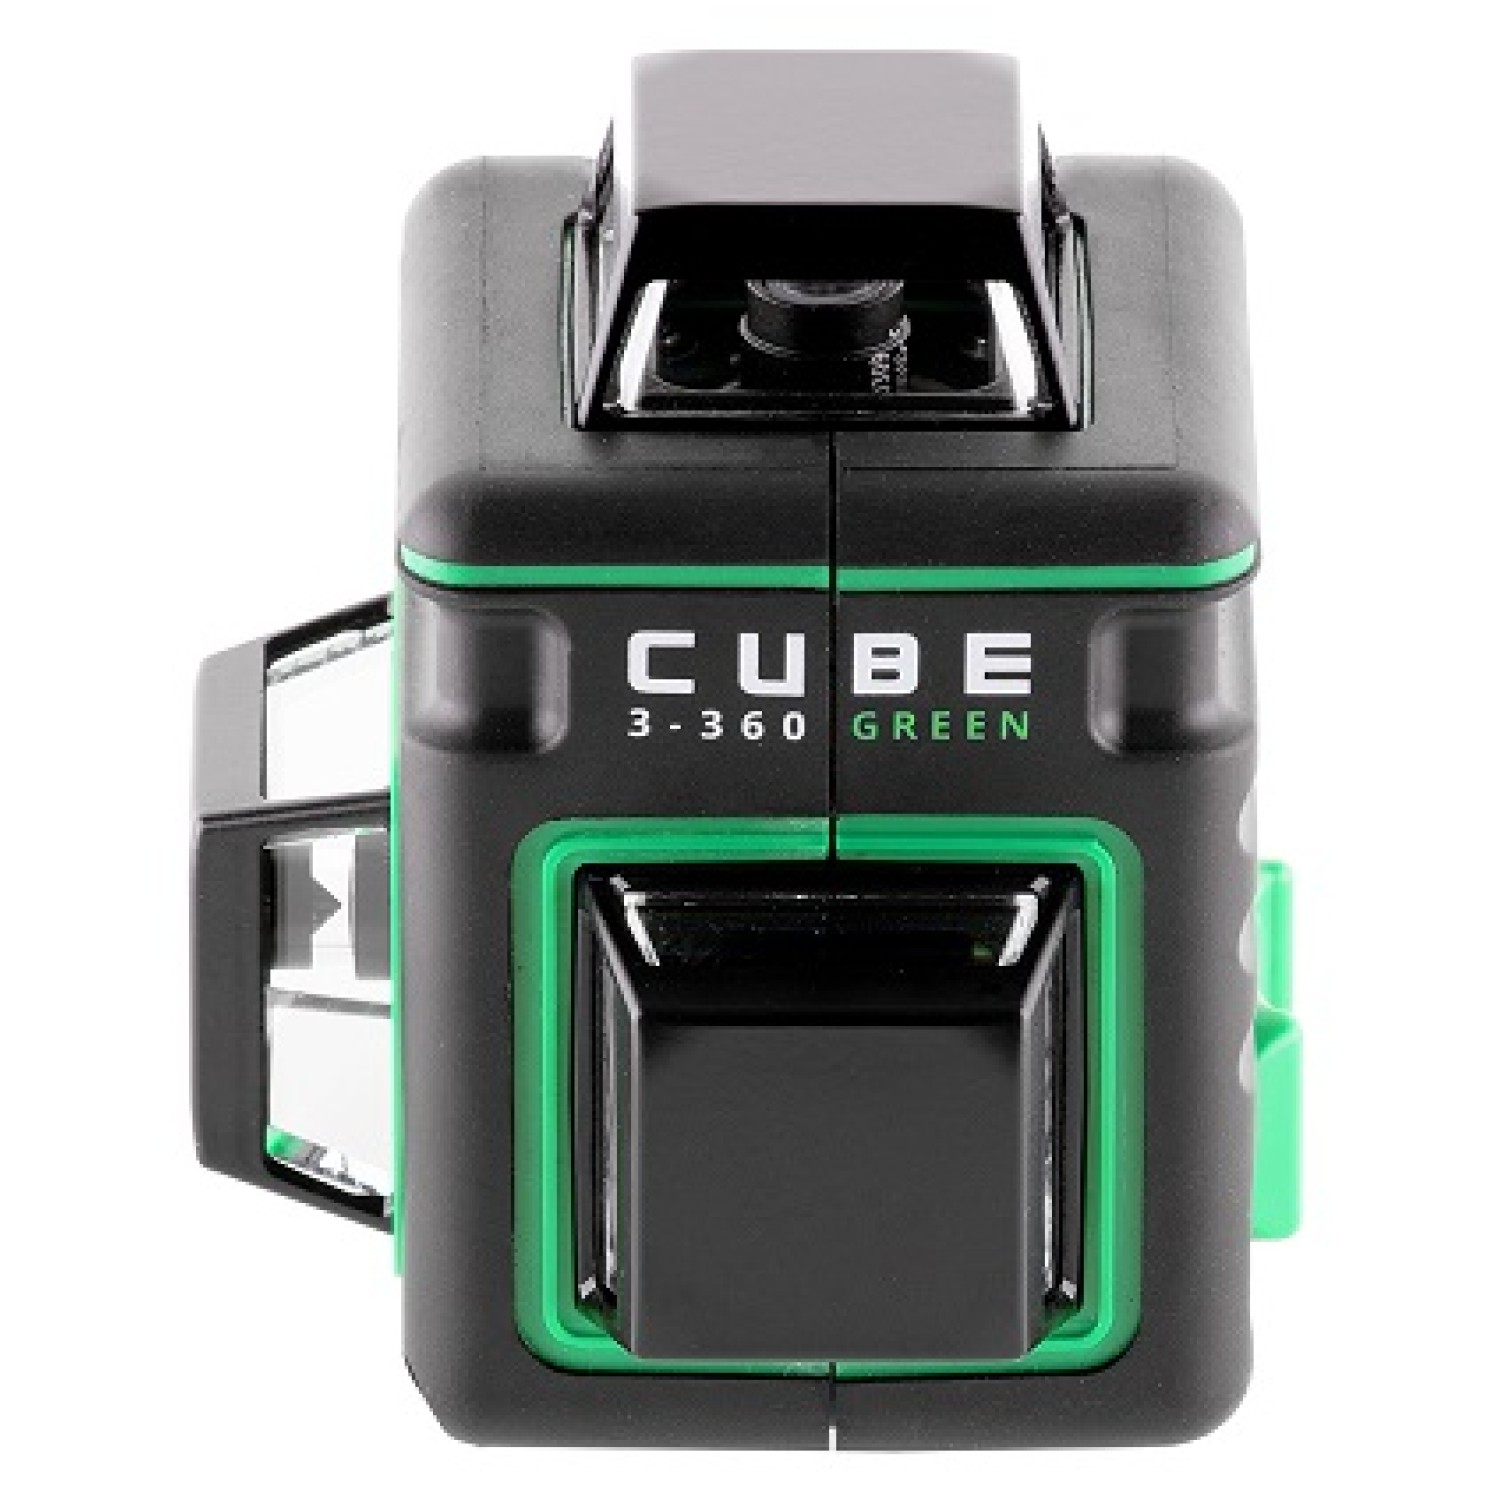 Ada instruments cube. Ada Cube 3-360 Green. Ada Cube 3-360 Basic Edition а00559. Уровень лазерный ada Cube 3-360 Green Ultimate Edition. Лазерный уровень ada Cube 360 Basic Edition.